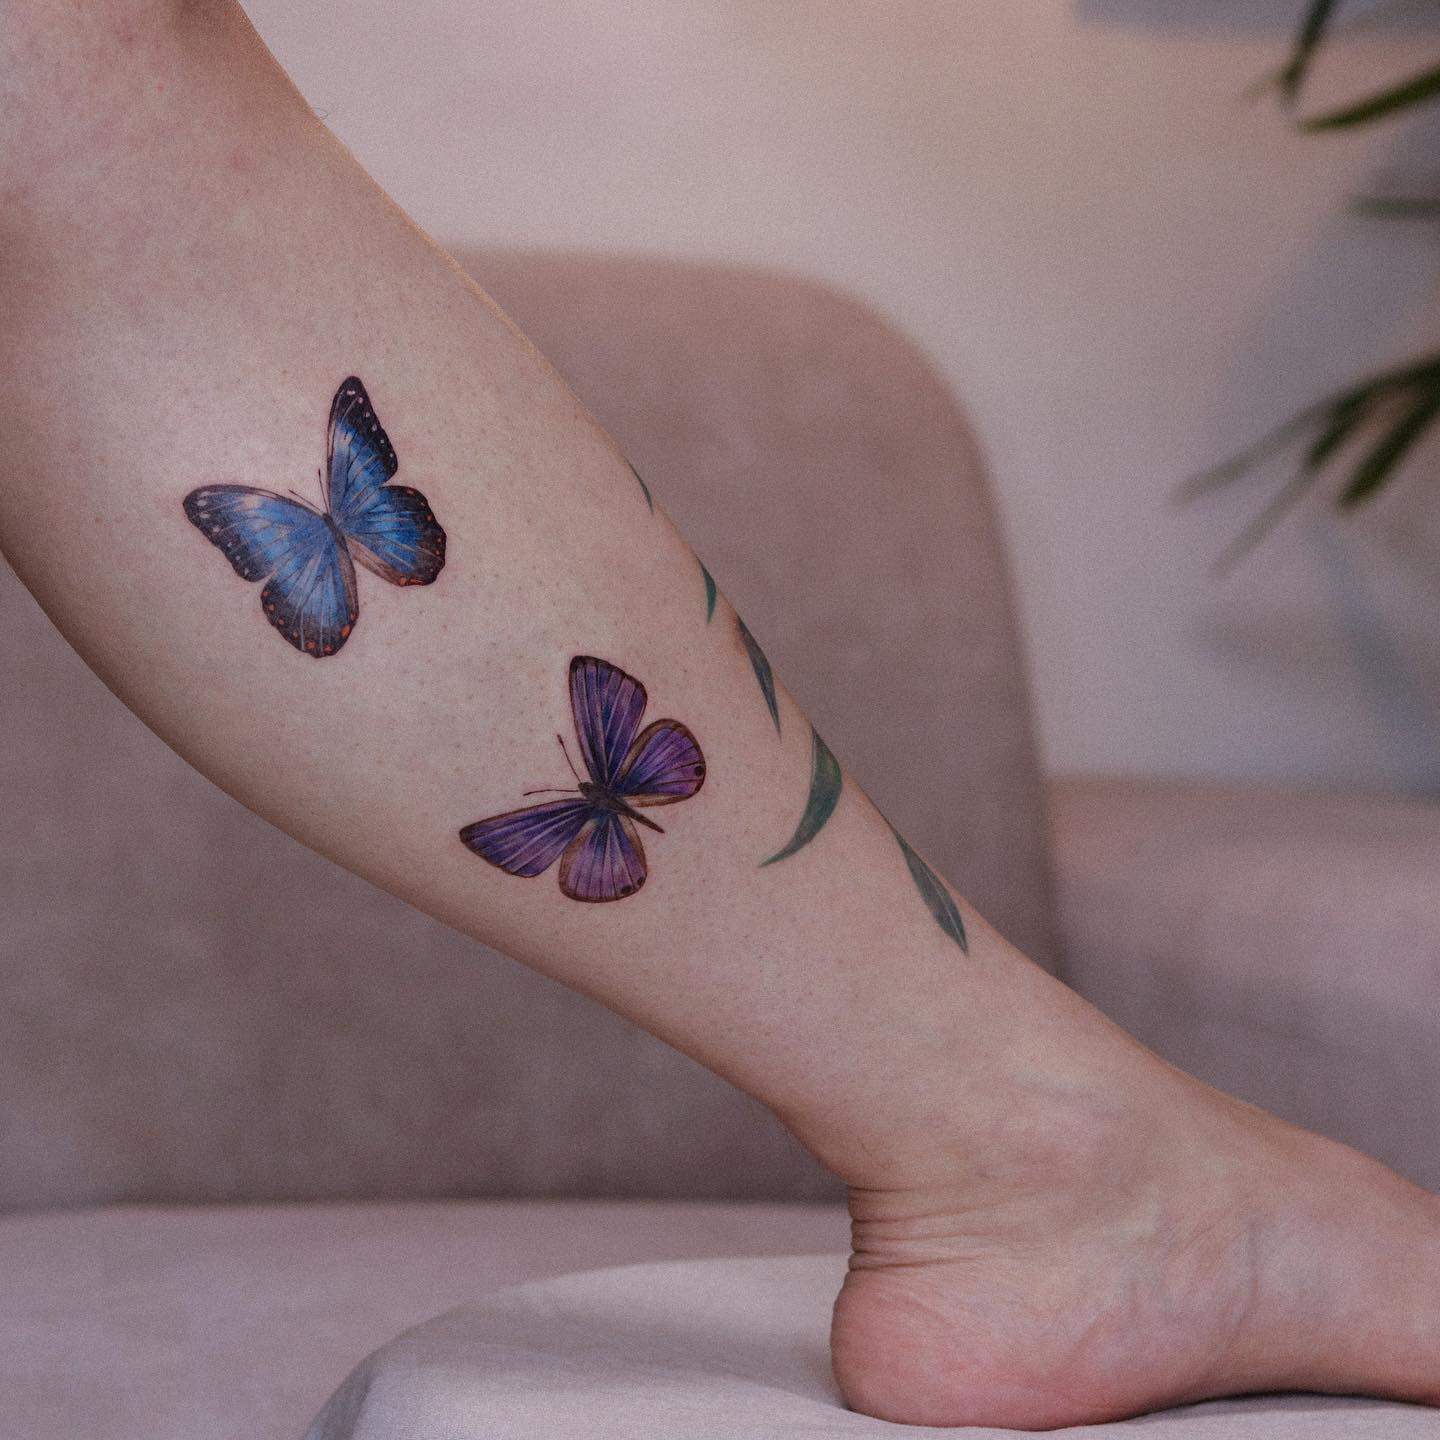 Purplr butterfly tattoo by ro.one tattoo